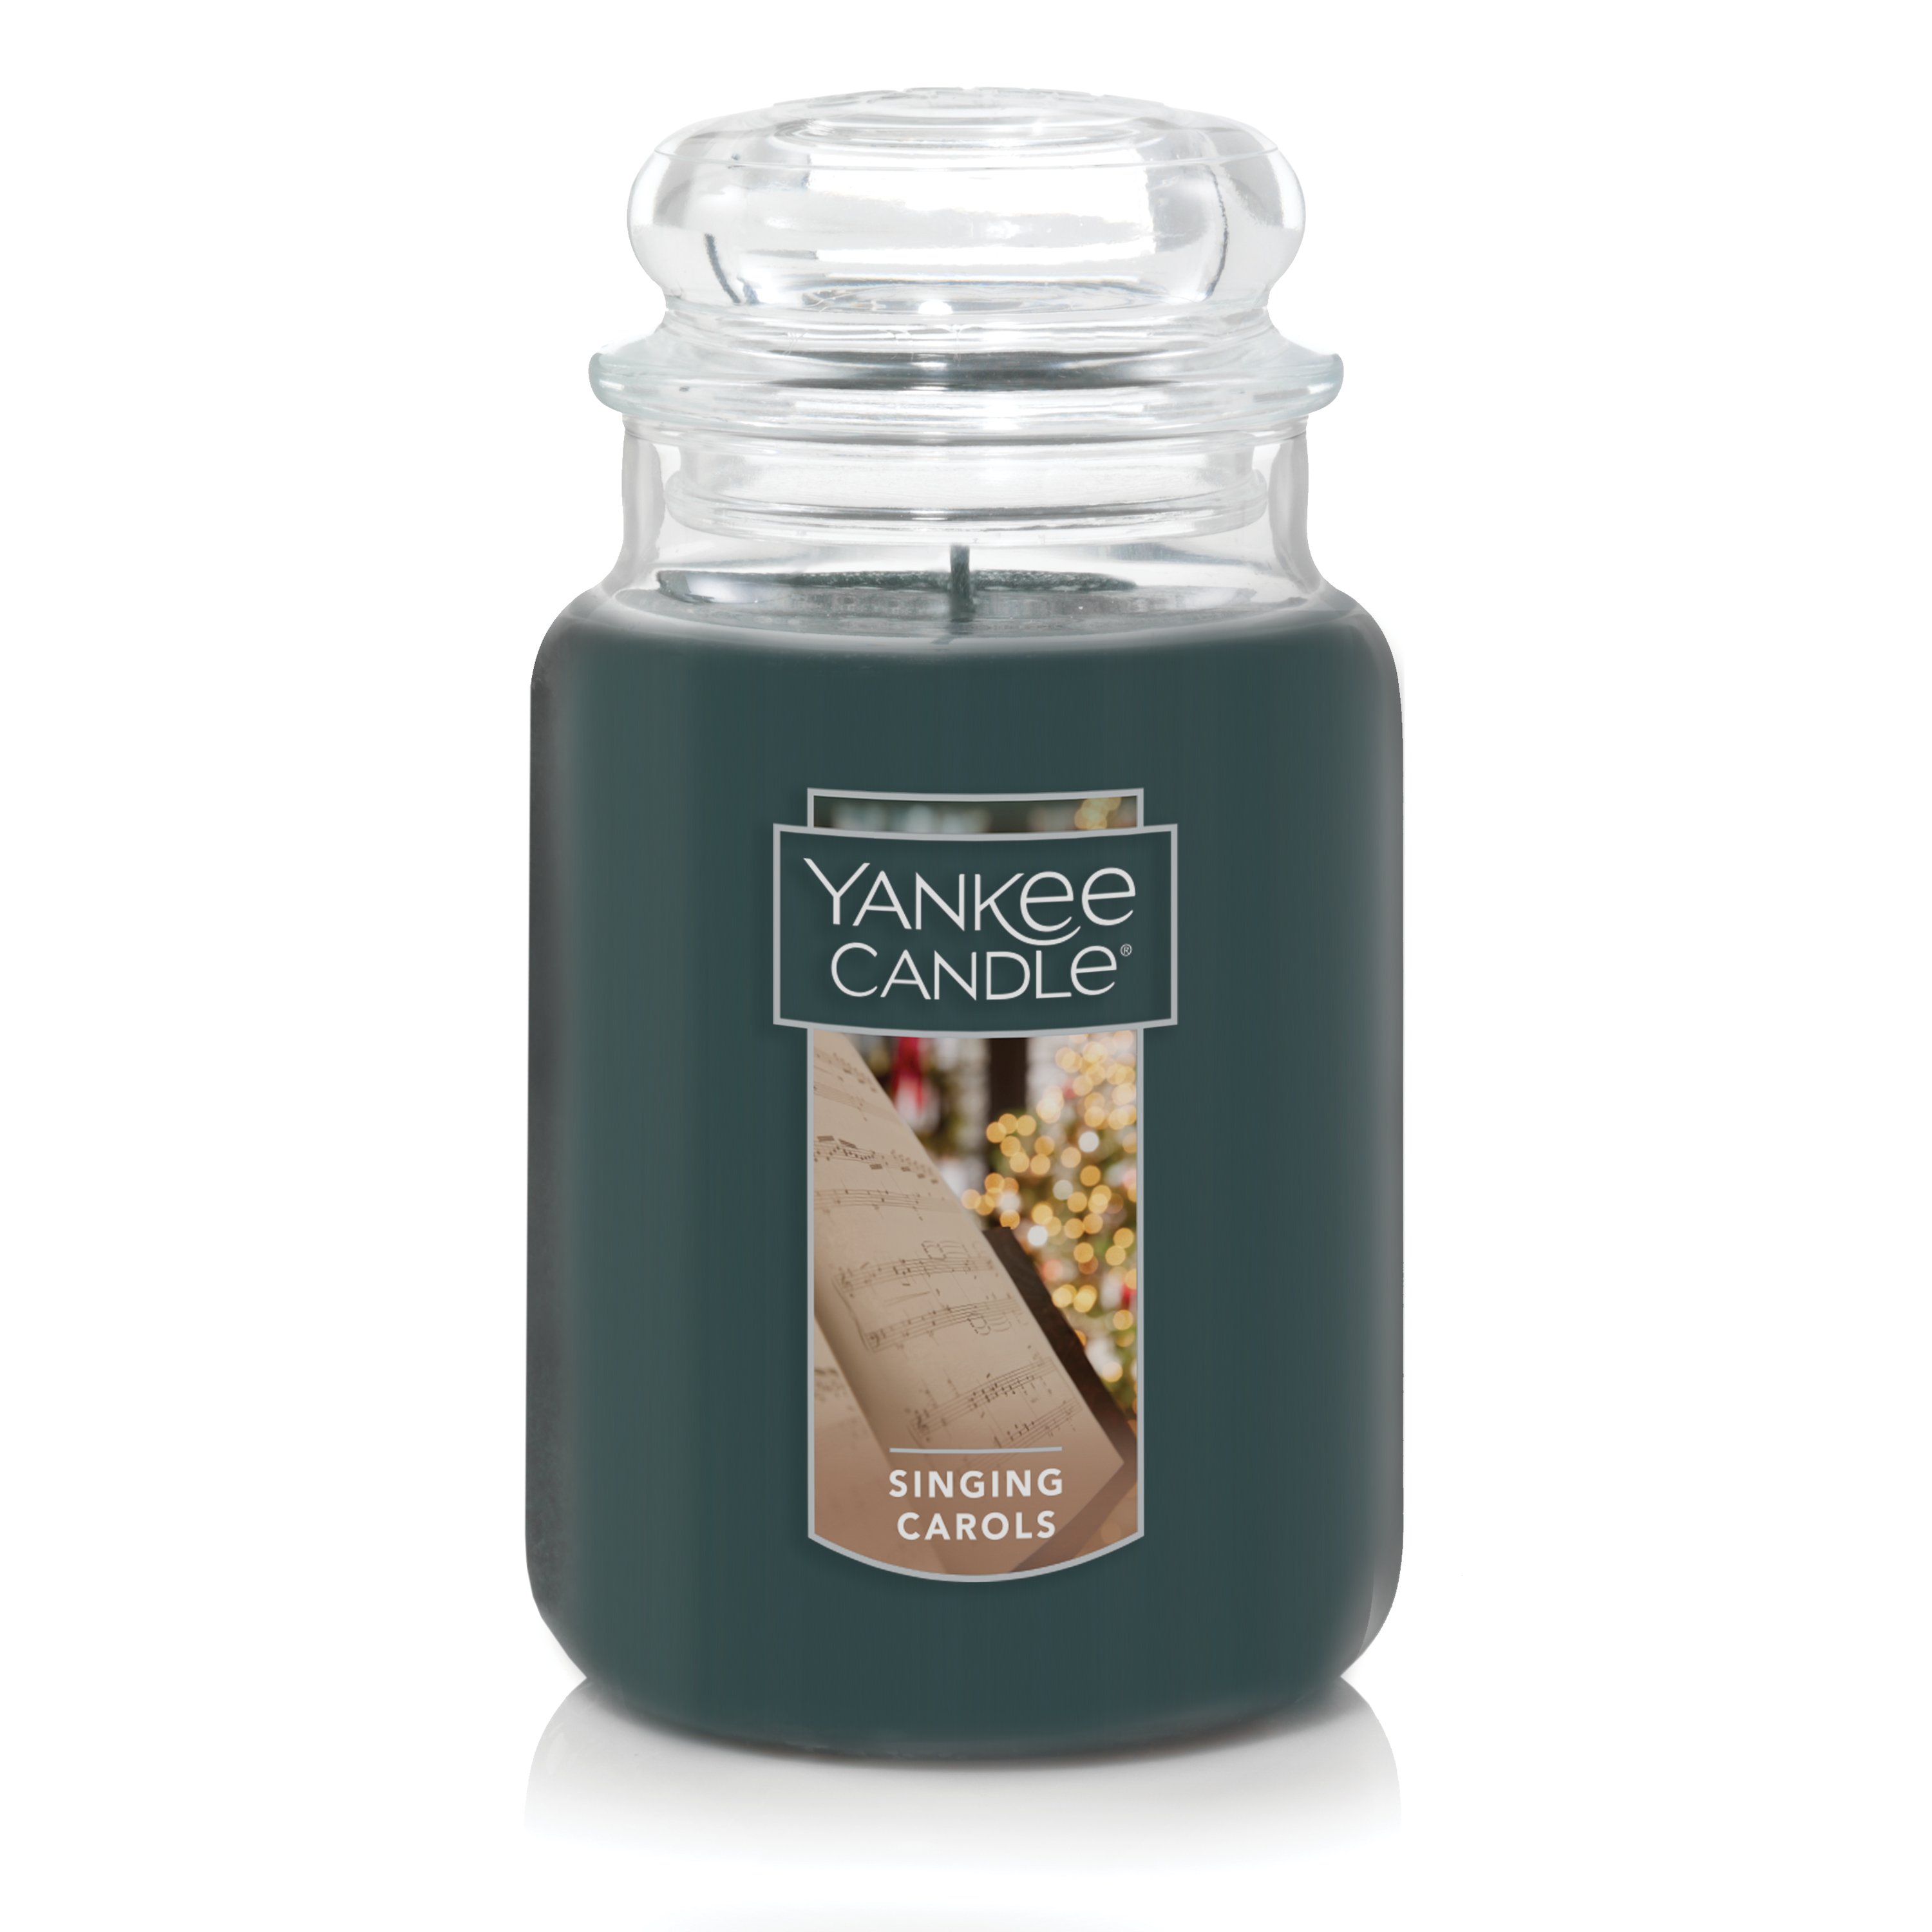 Yankee Candle Sparkling Cinnamon - 22 oz Original Large Jar Scented Candle